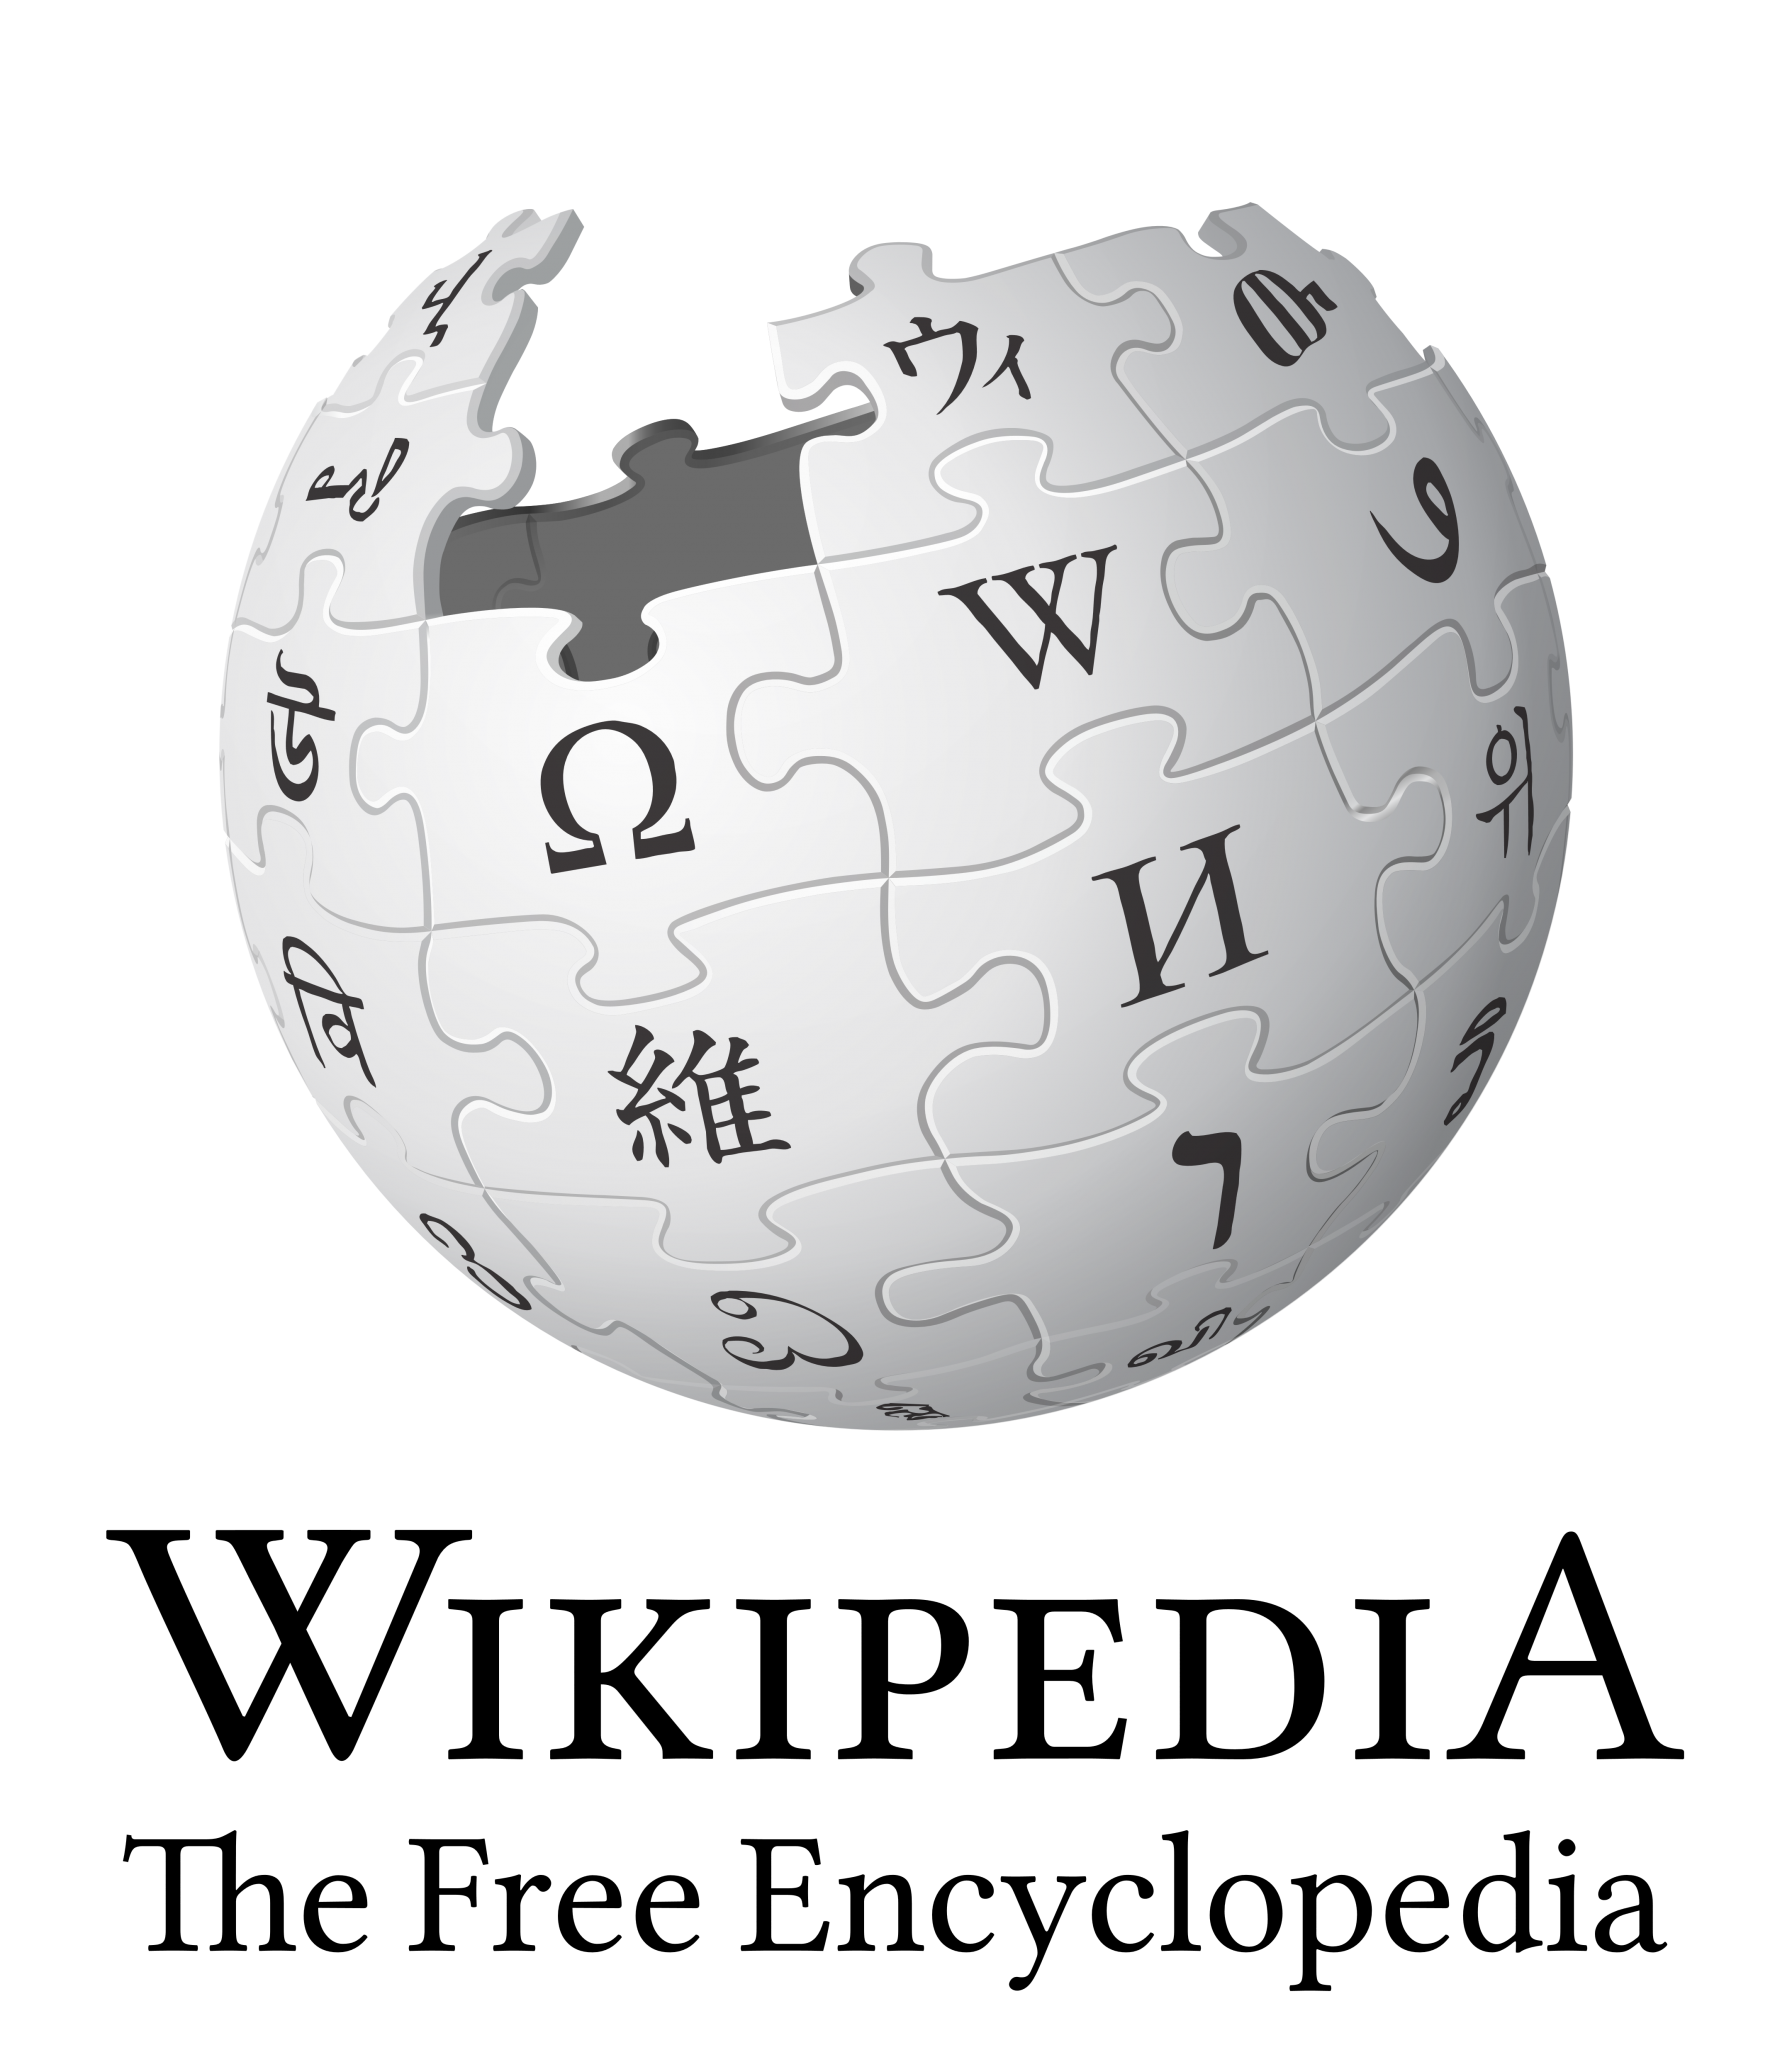 High Quality Wikipedia Logo Blank Meme Template